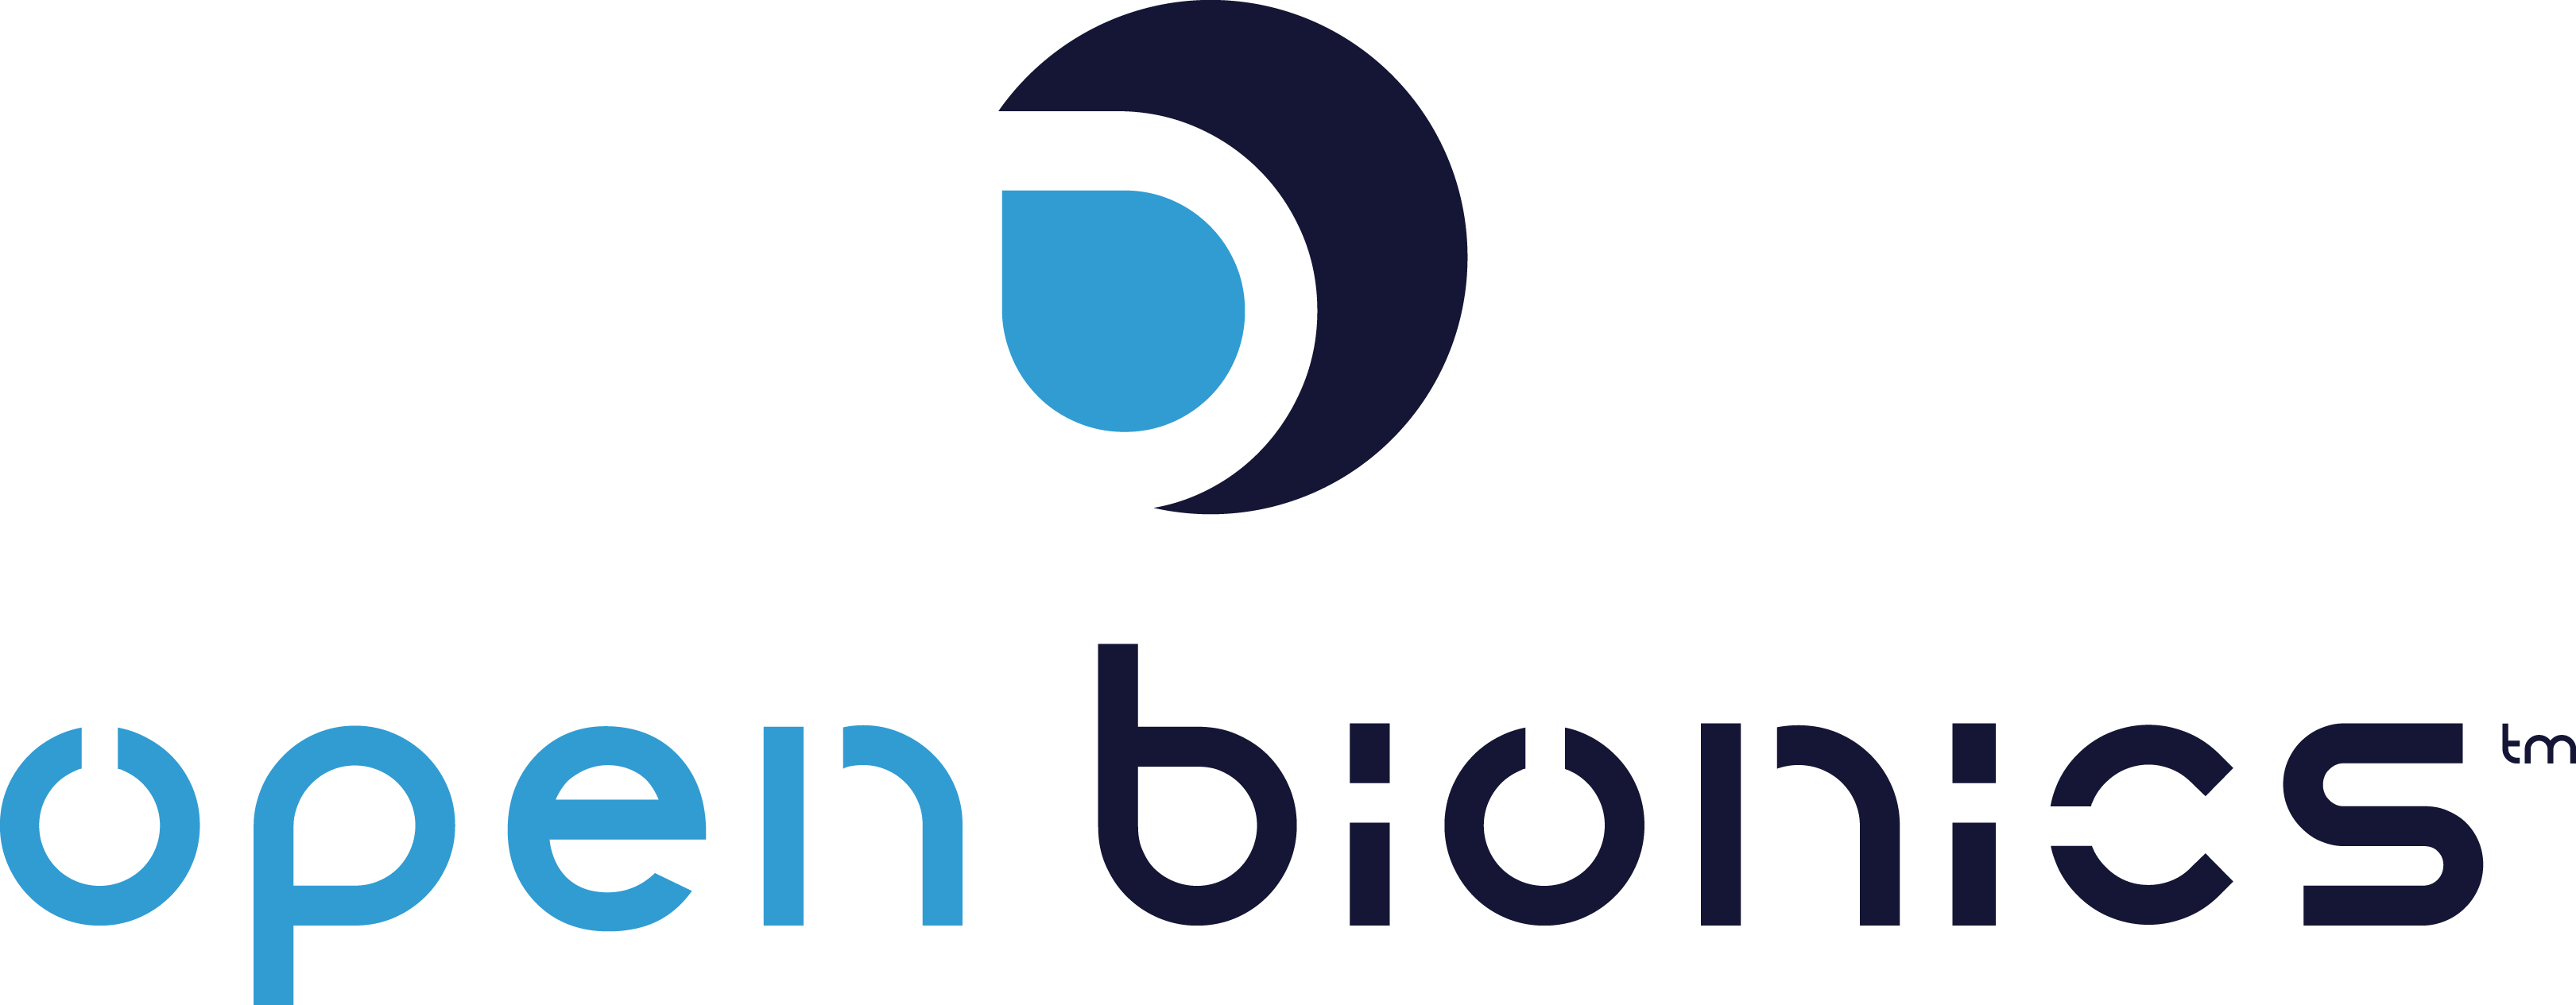 Bionic Logo - Open Bionics - turning disabilities into superpowers